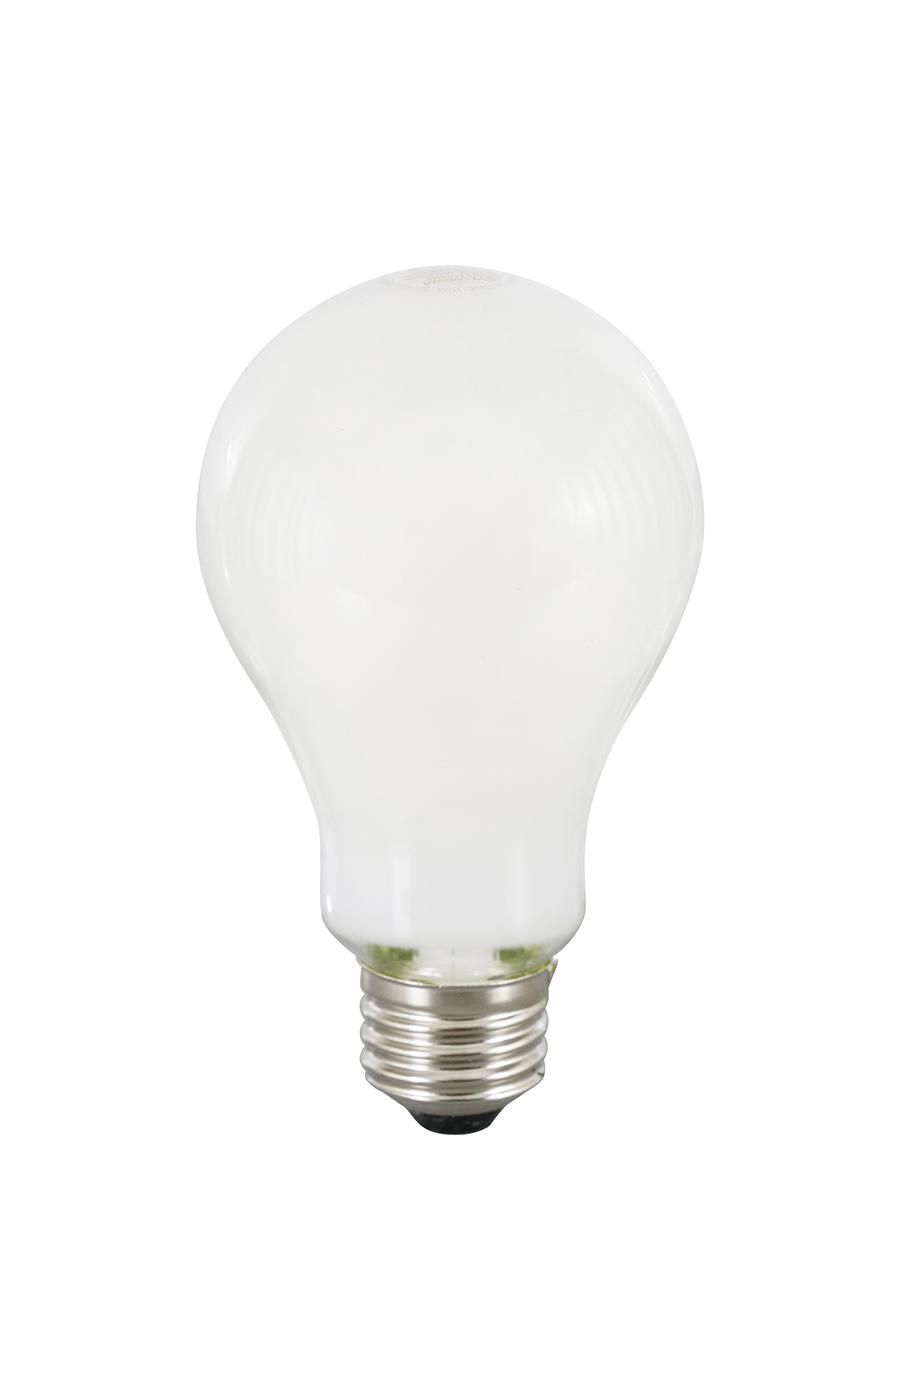 Sylvania TruWave A21 100-Watt Frosted LED Light Bulbs - Daylight; image 2 of 2